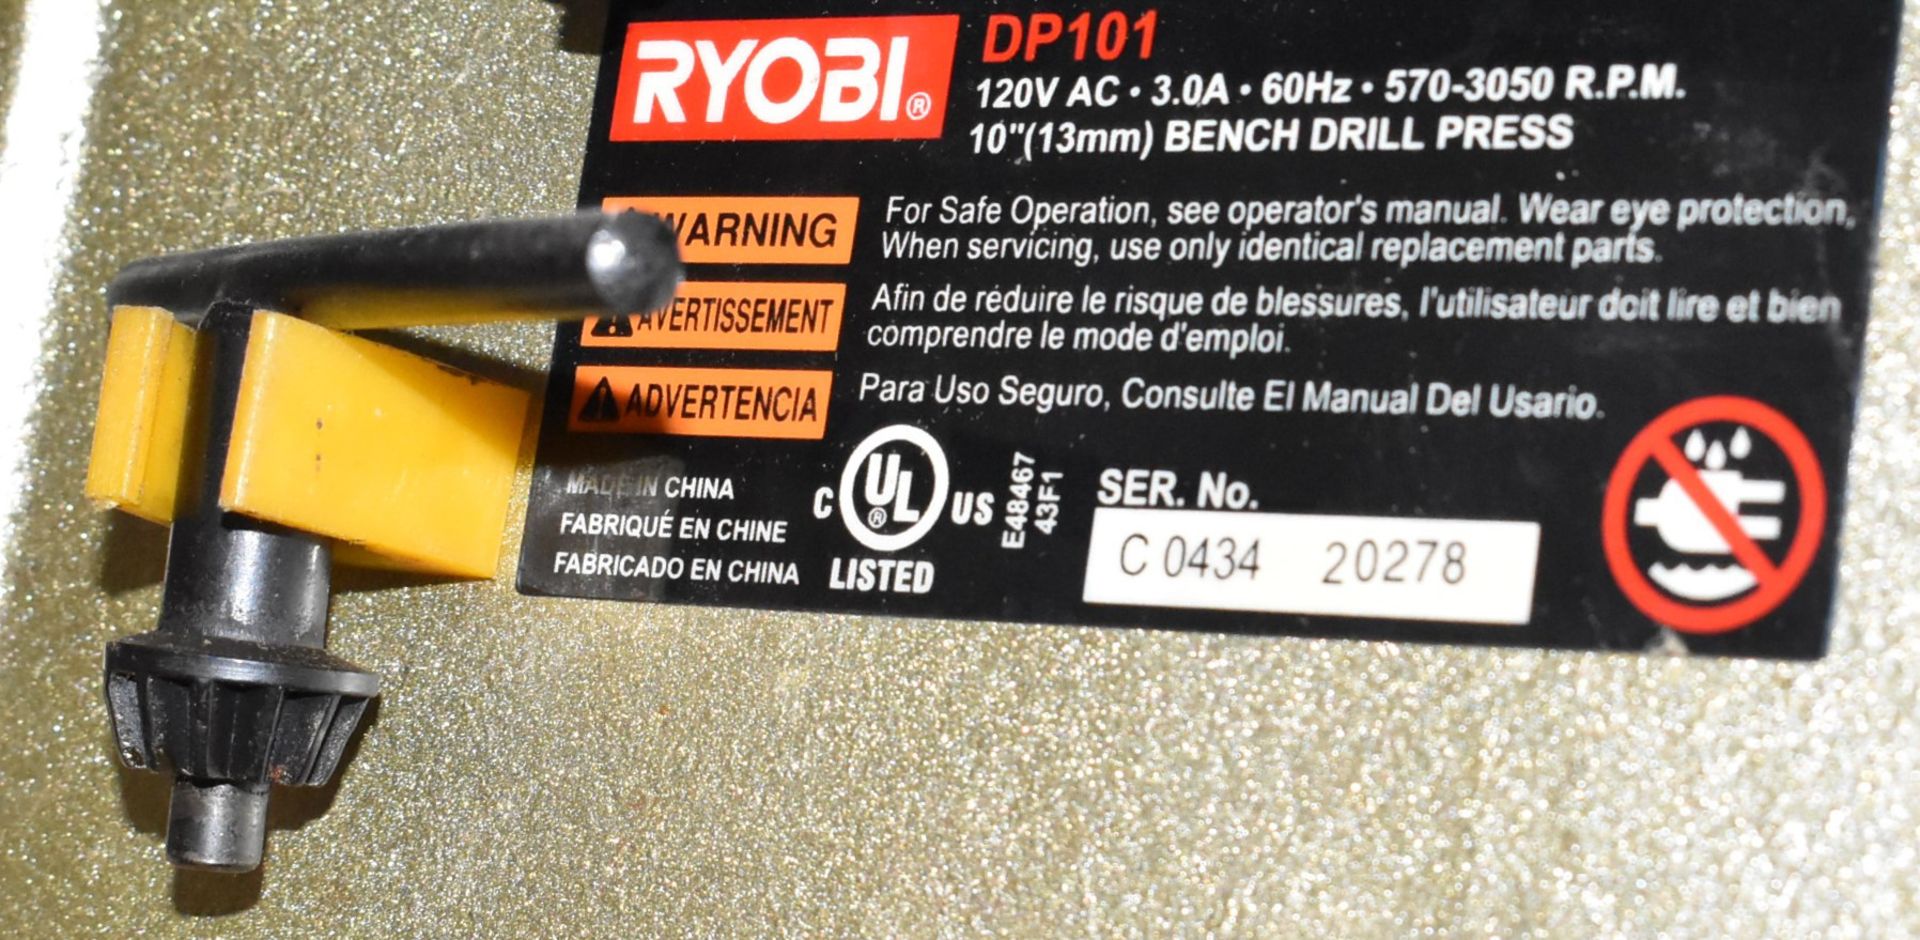 RYOBI 10" DRILL PRESS, S/N C043420278 - Image 4 of 4